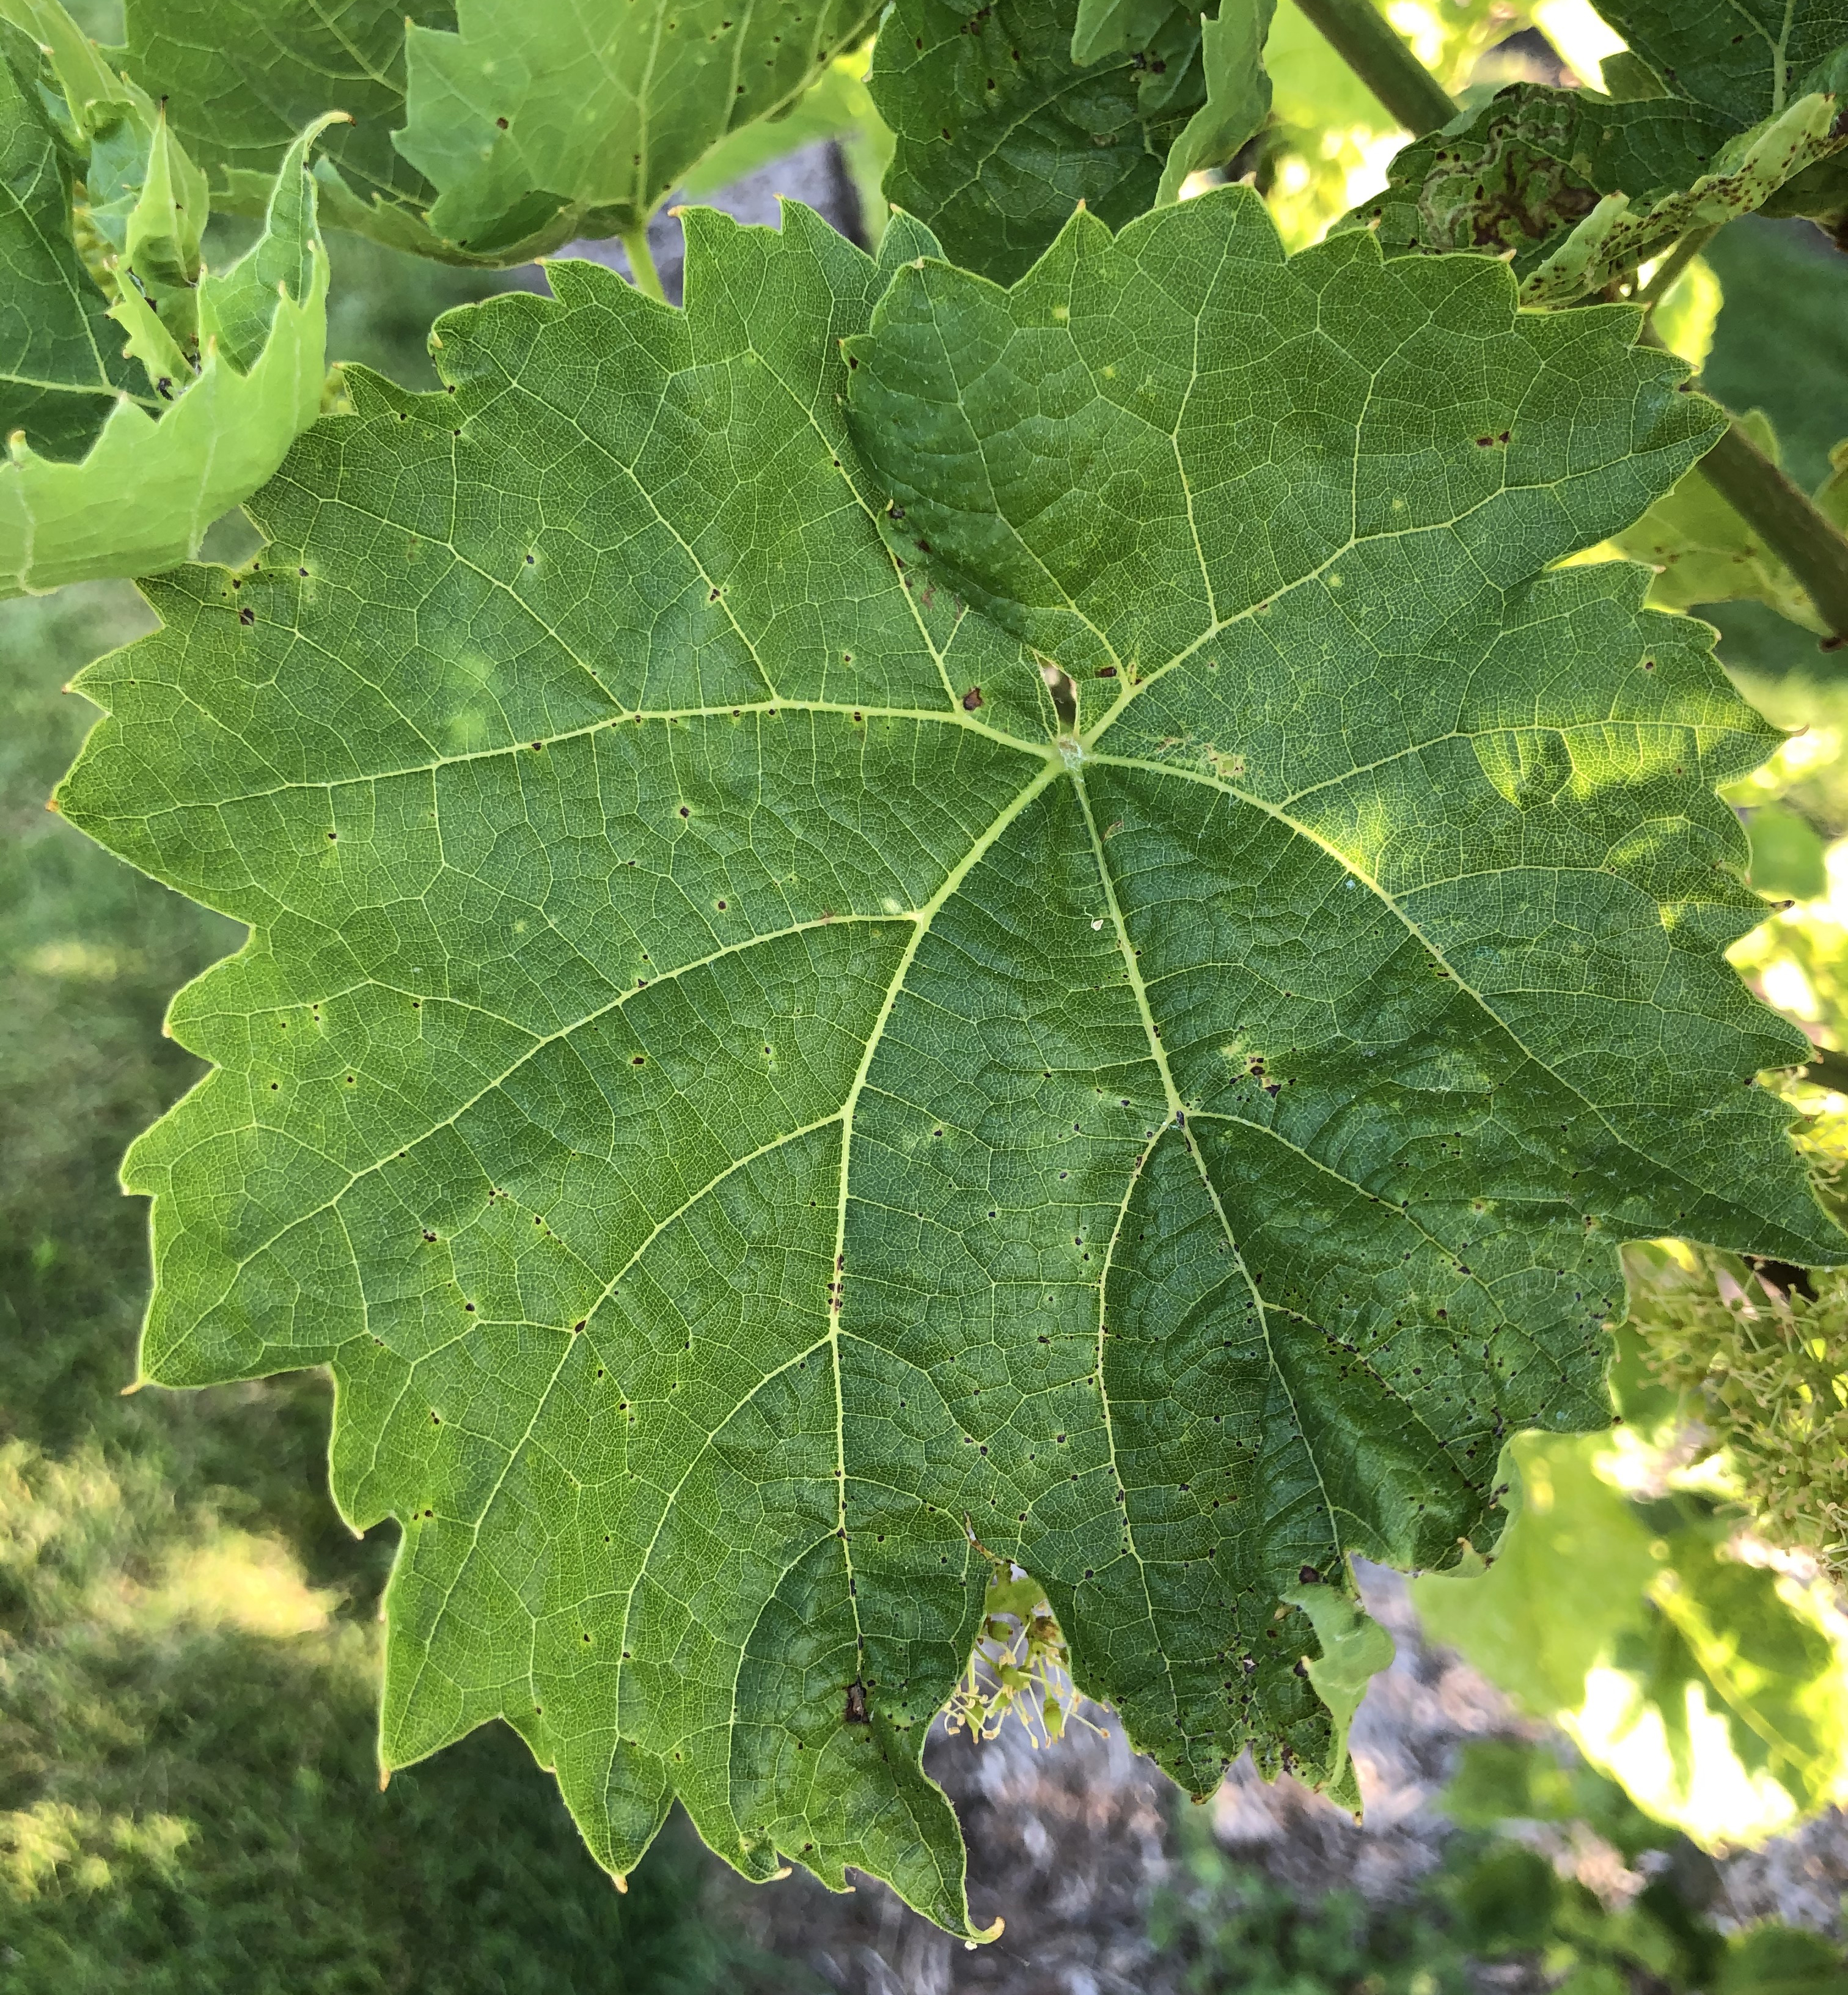 Phomopsis damage on leaves 